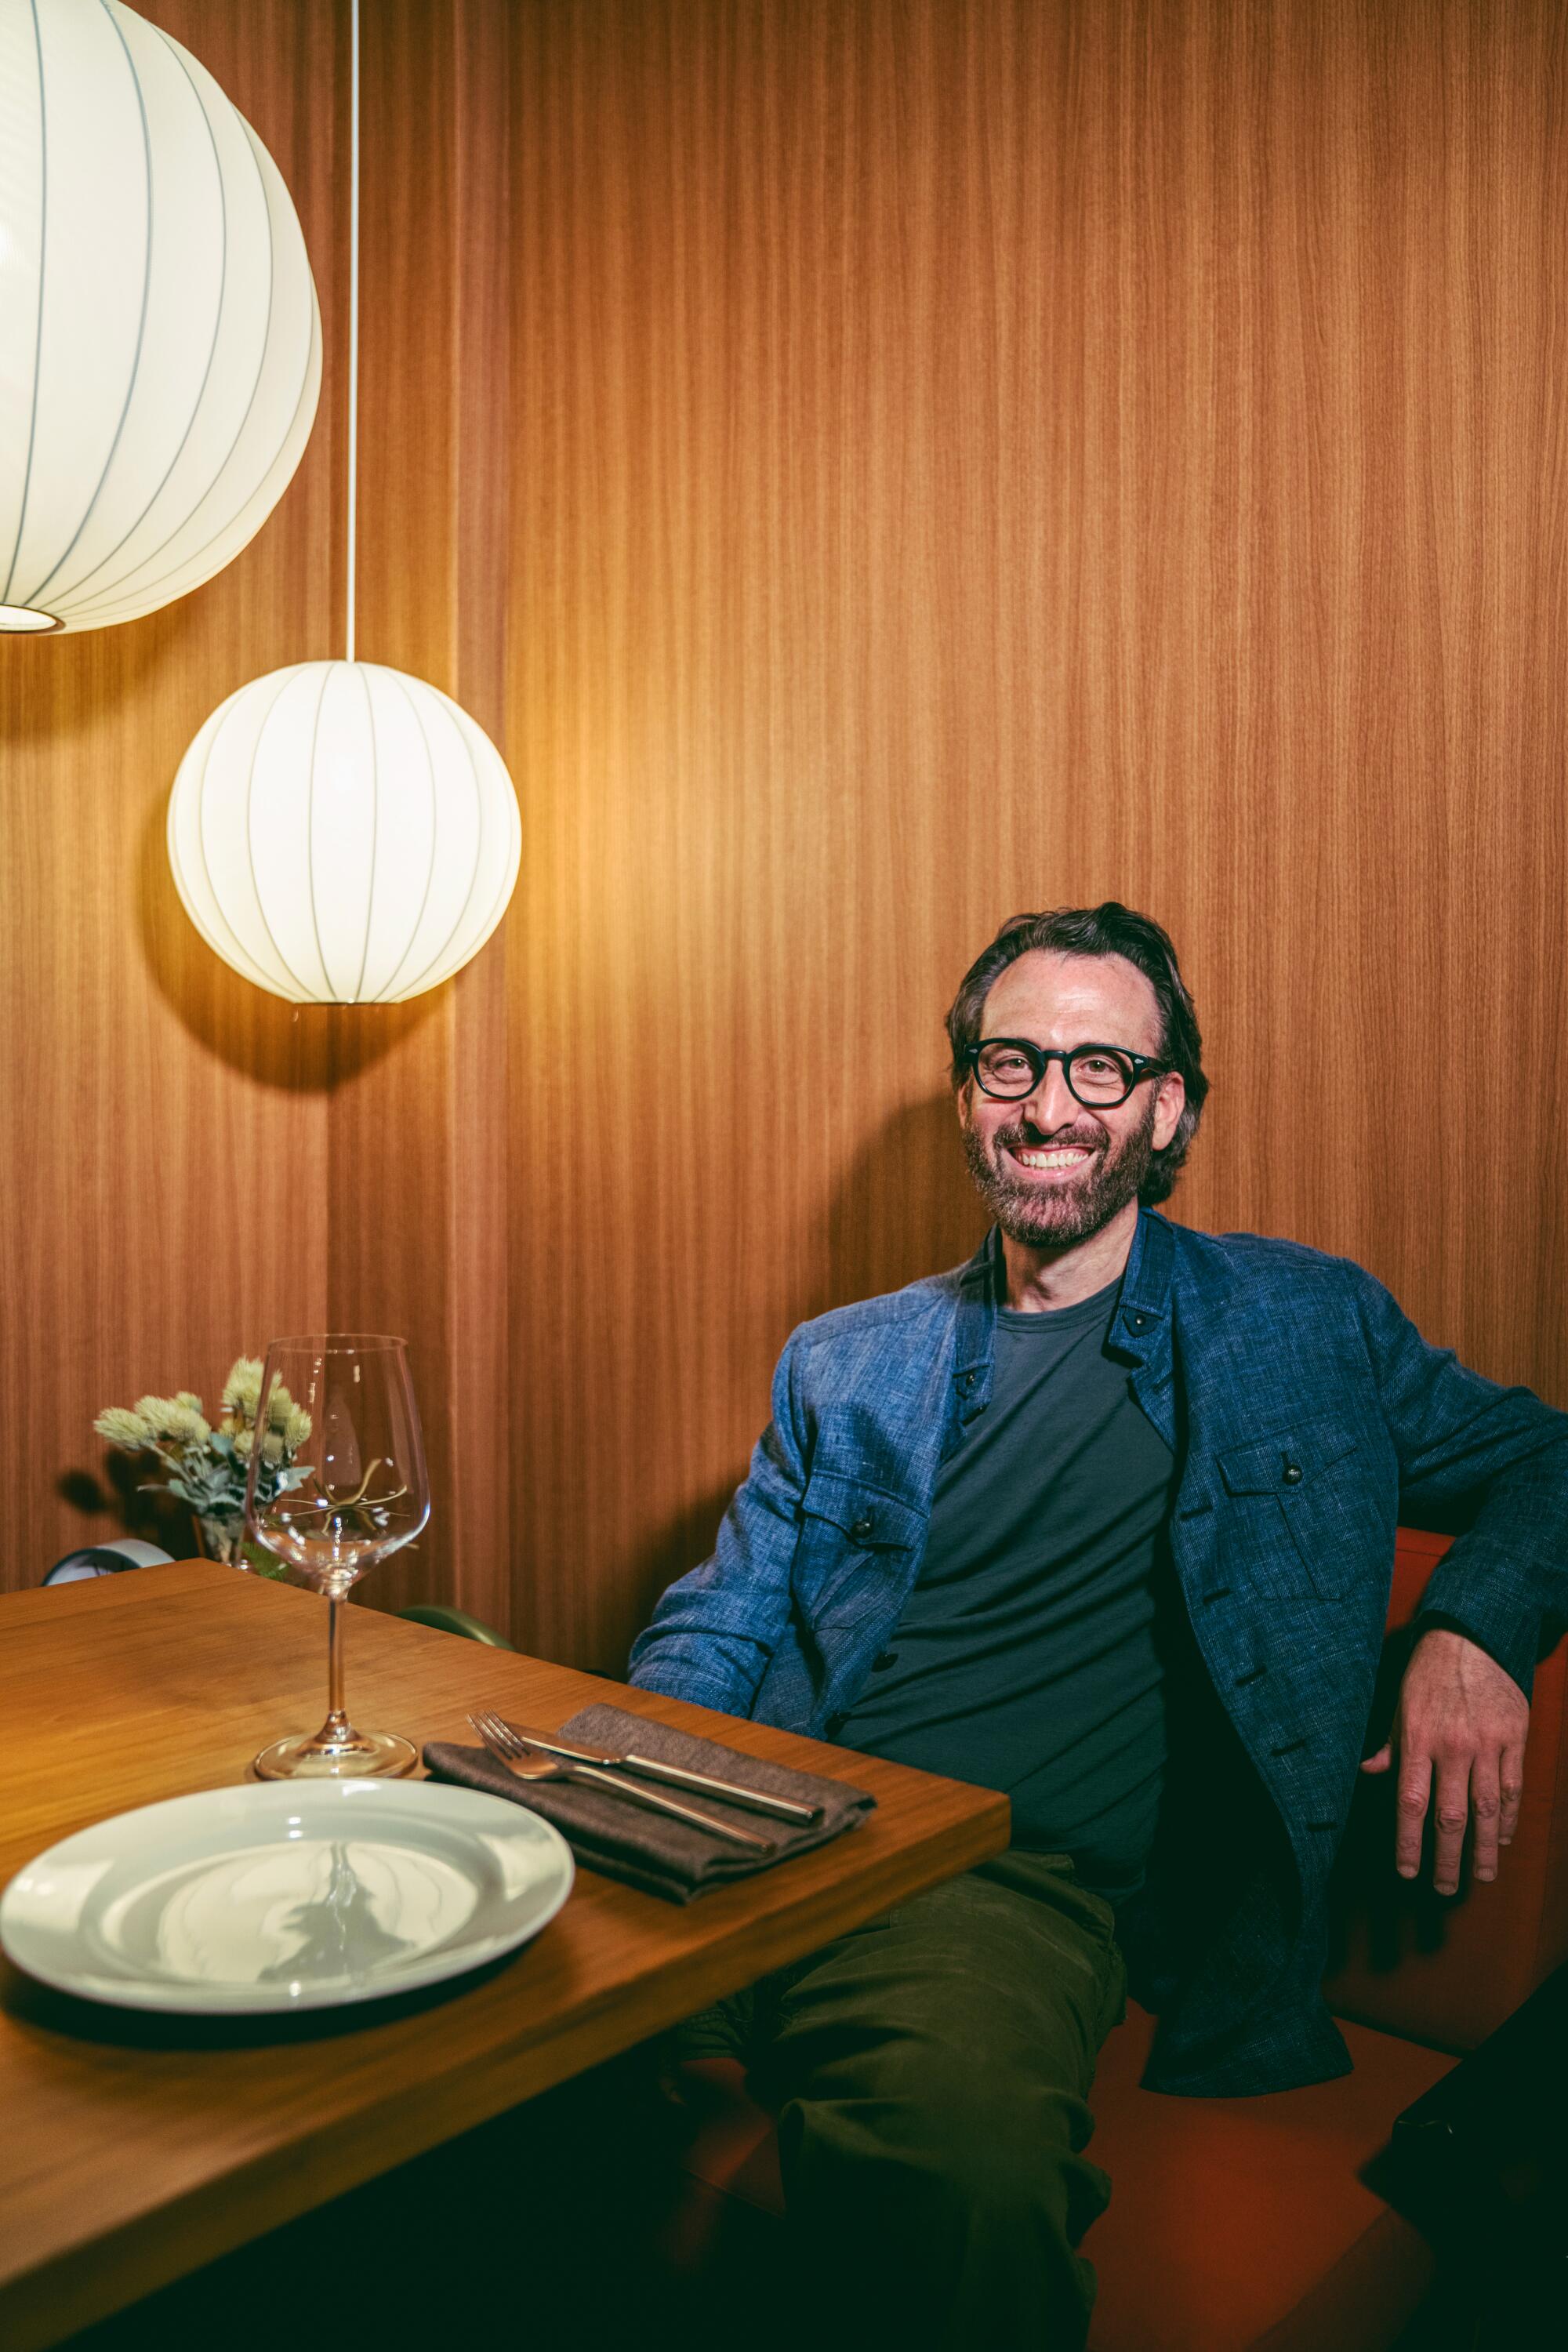 A man sits and smiles at the camera at a restaurant.